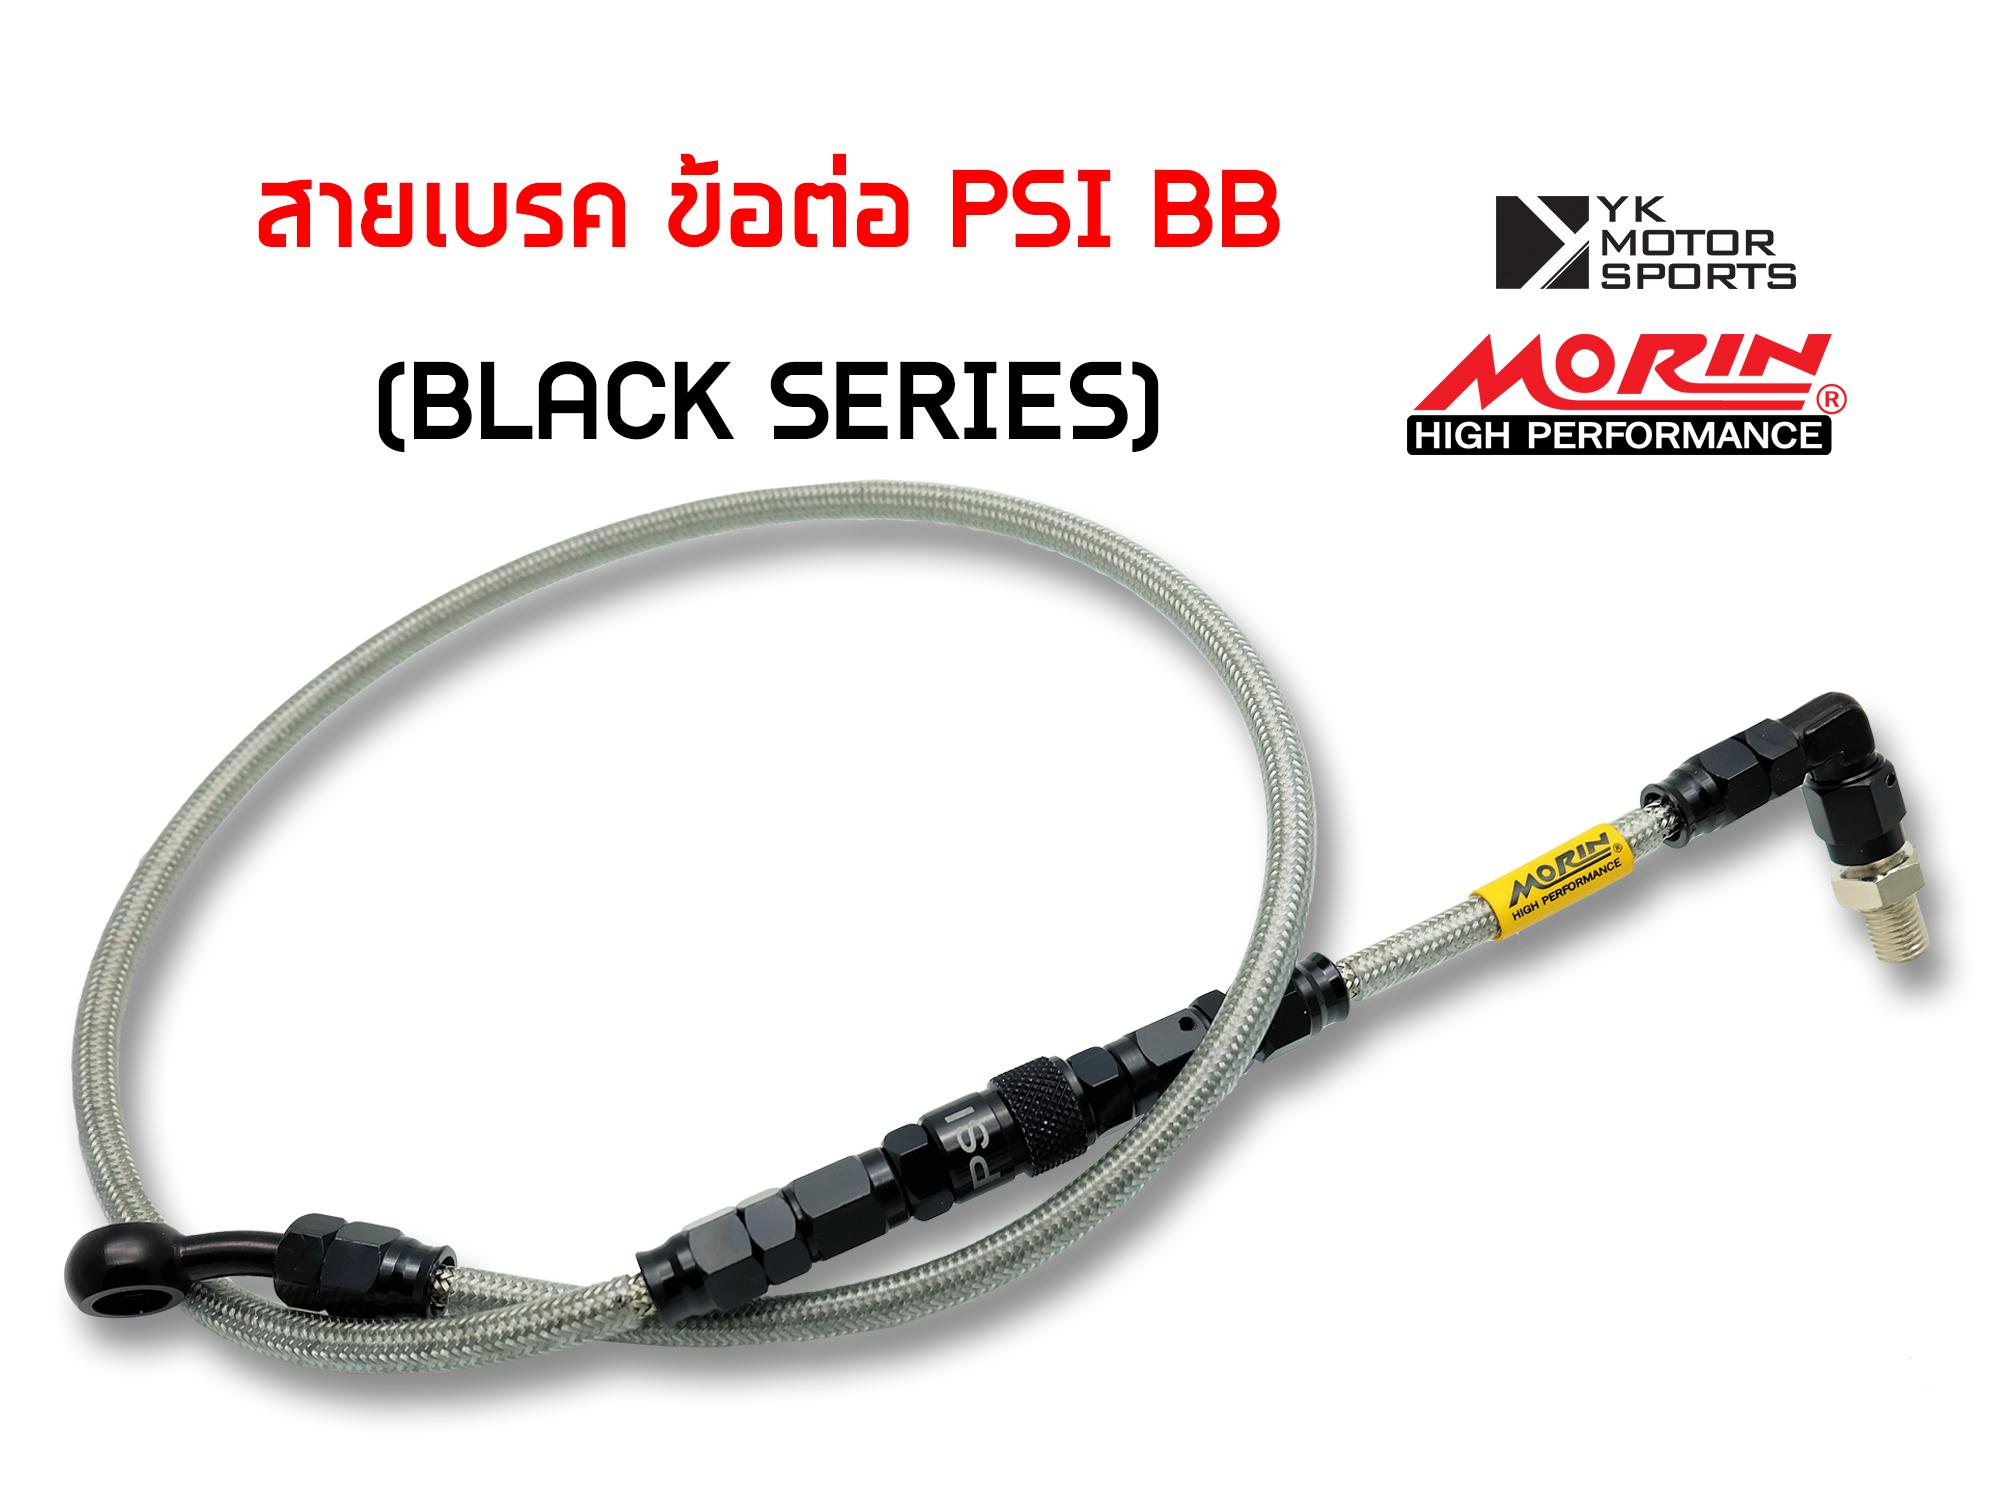 MORIN สายเบรค 36นิ้ว ข้อต่อPSI BB สีเทา Black series ของแต่งมอไซต์WAVE สำหรับรถมอไซต์ที่ใช้สายเบรค36นิ้ว ของแท้! ส่งฟรี